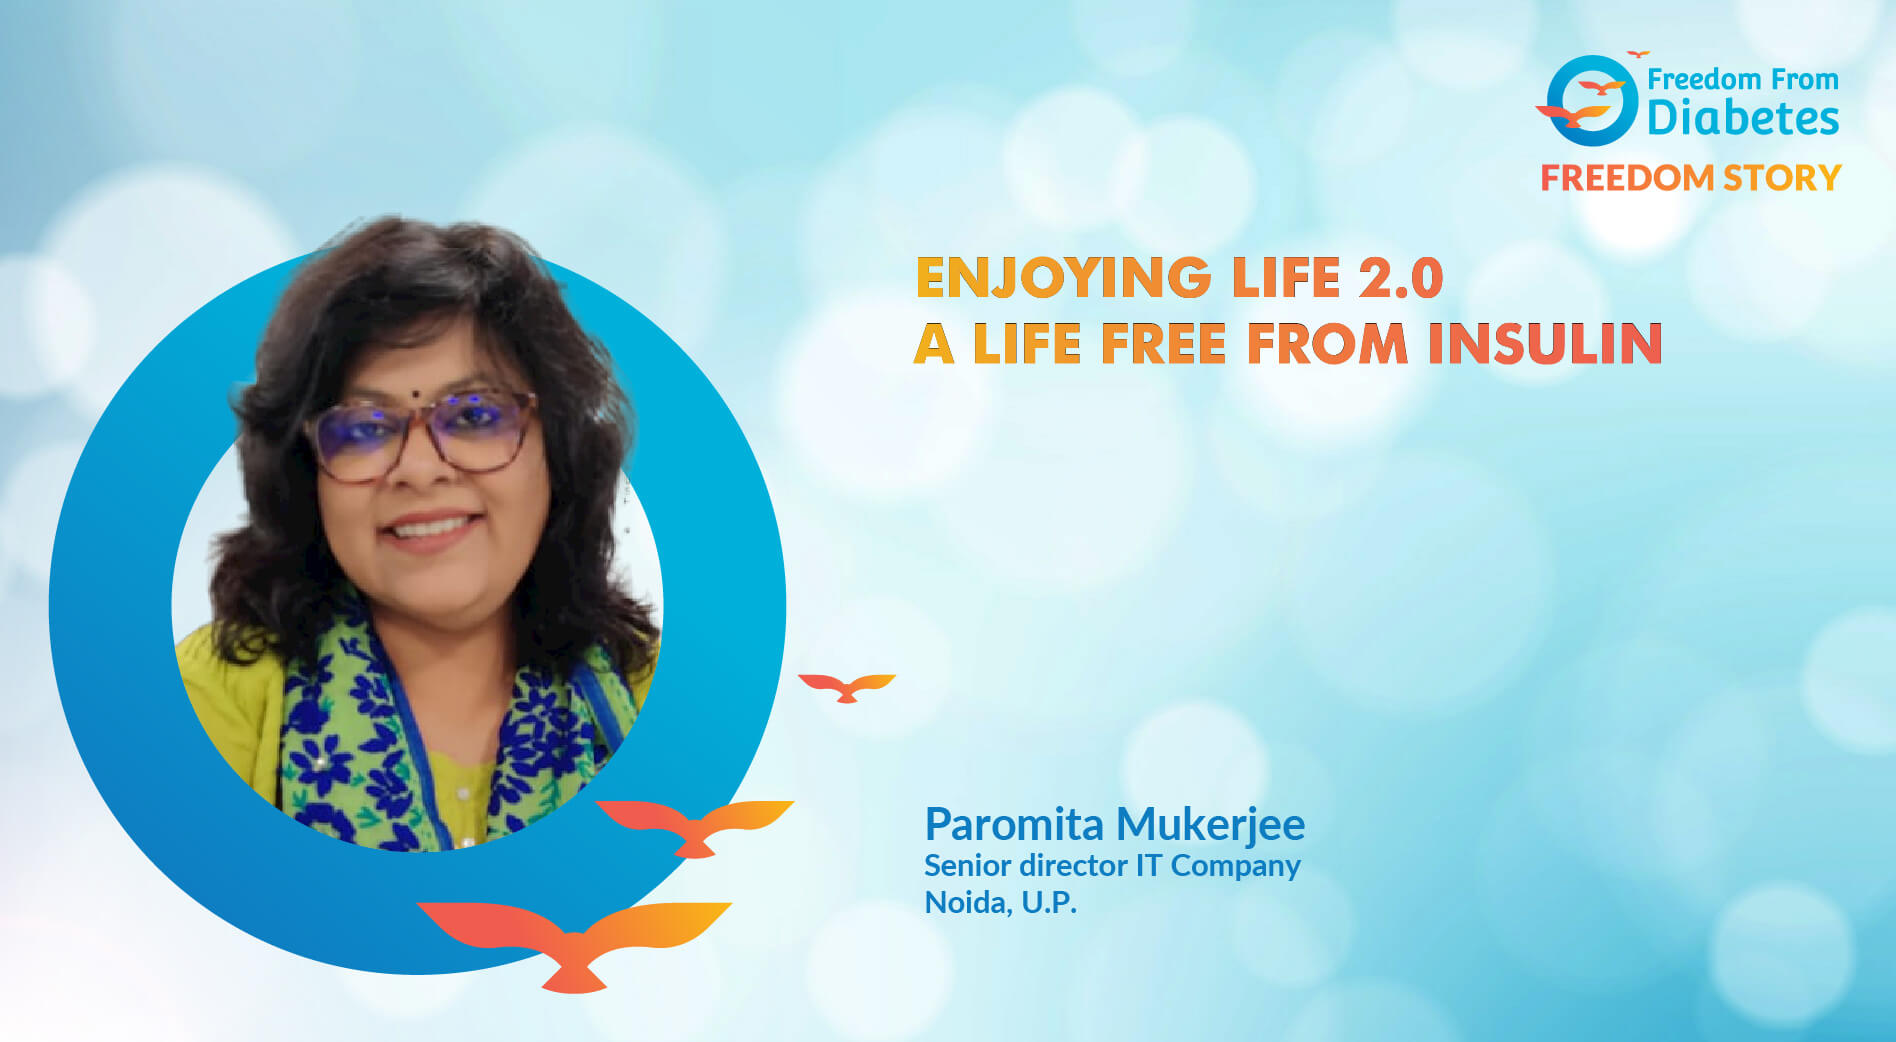 Paromita Mukerjee: FFD helped me stop 56 units of insulin